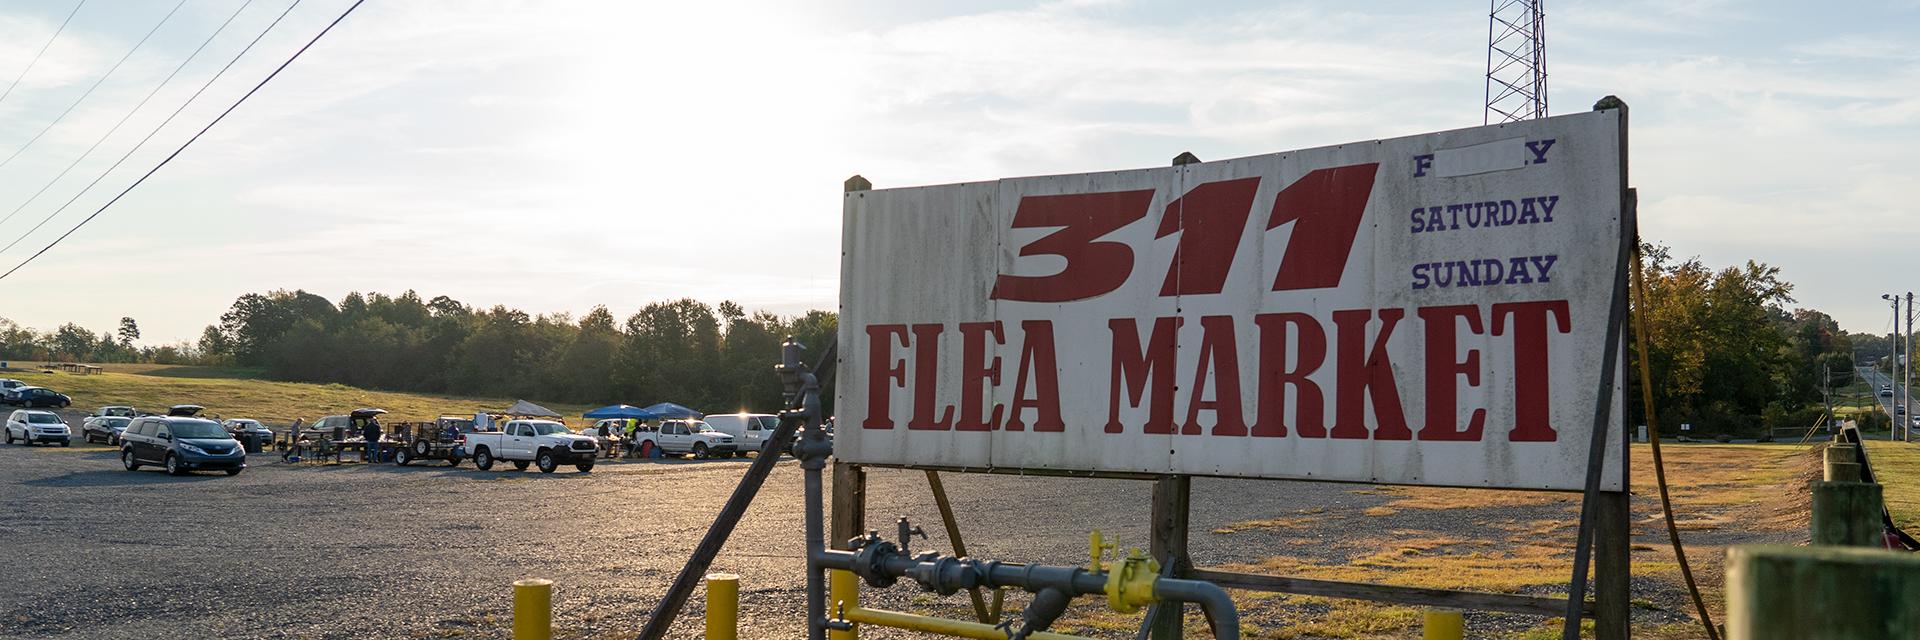 311 Flea Market Sign